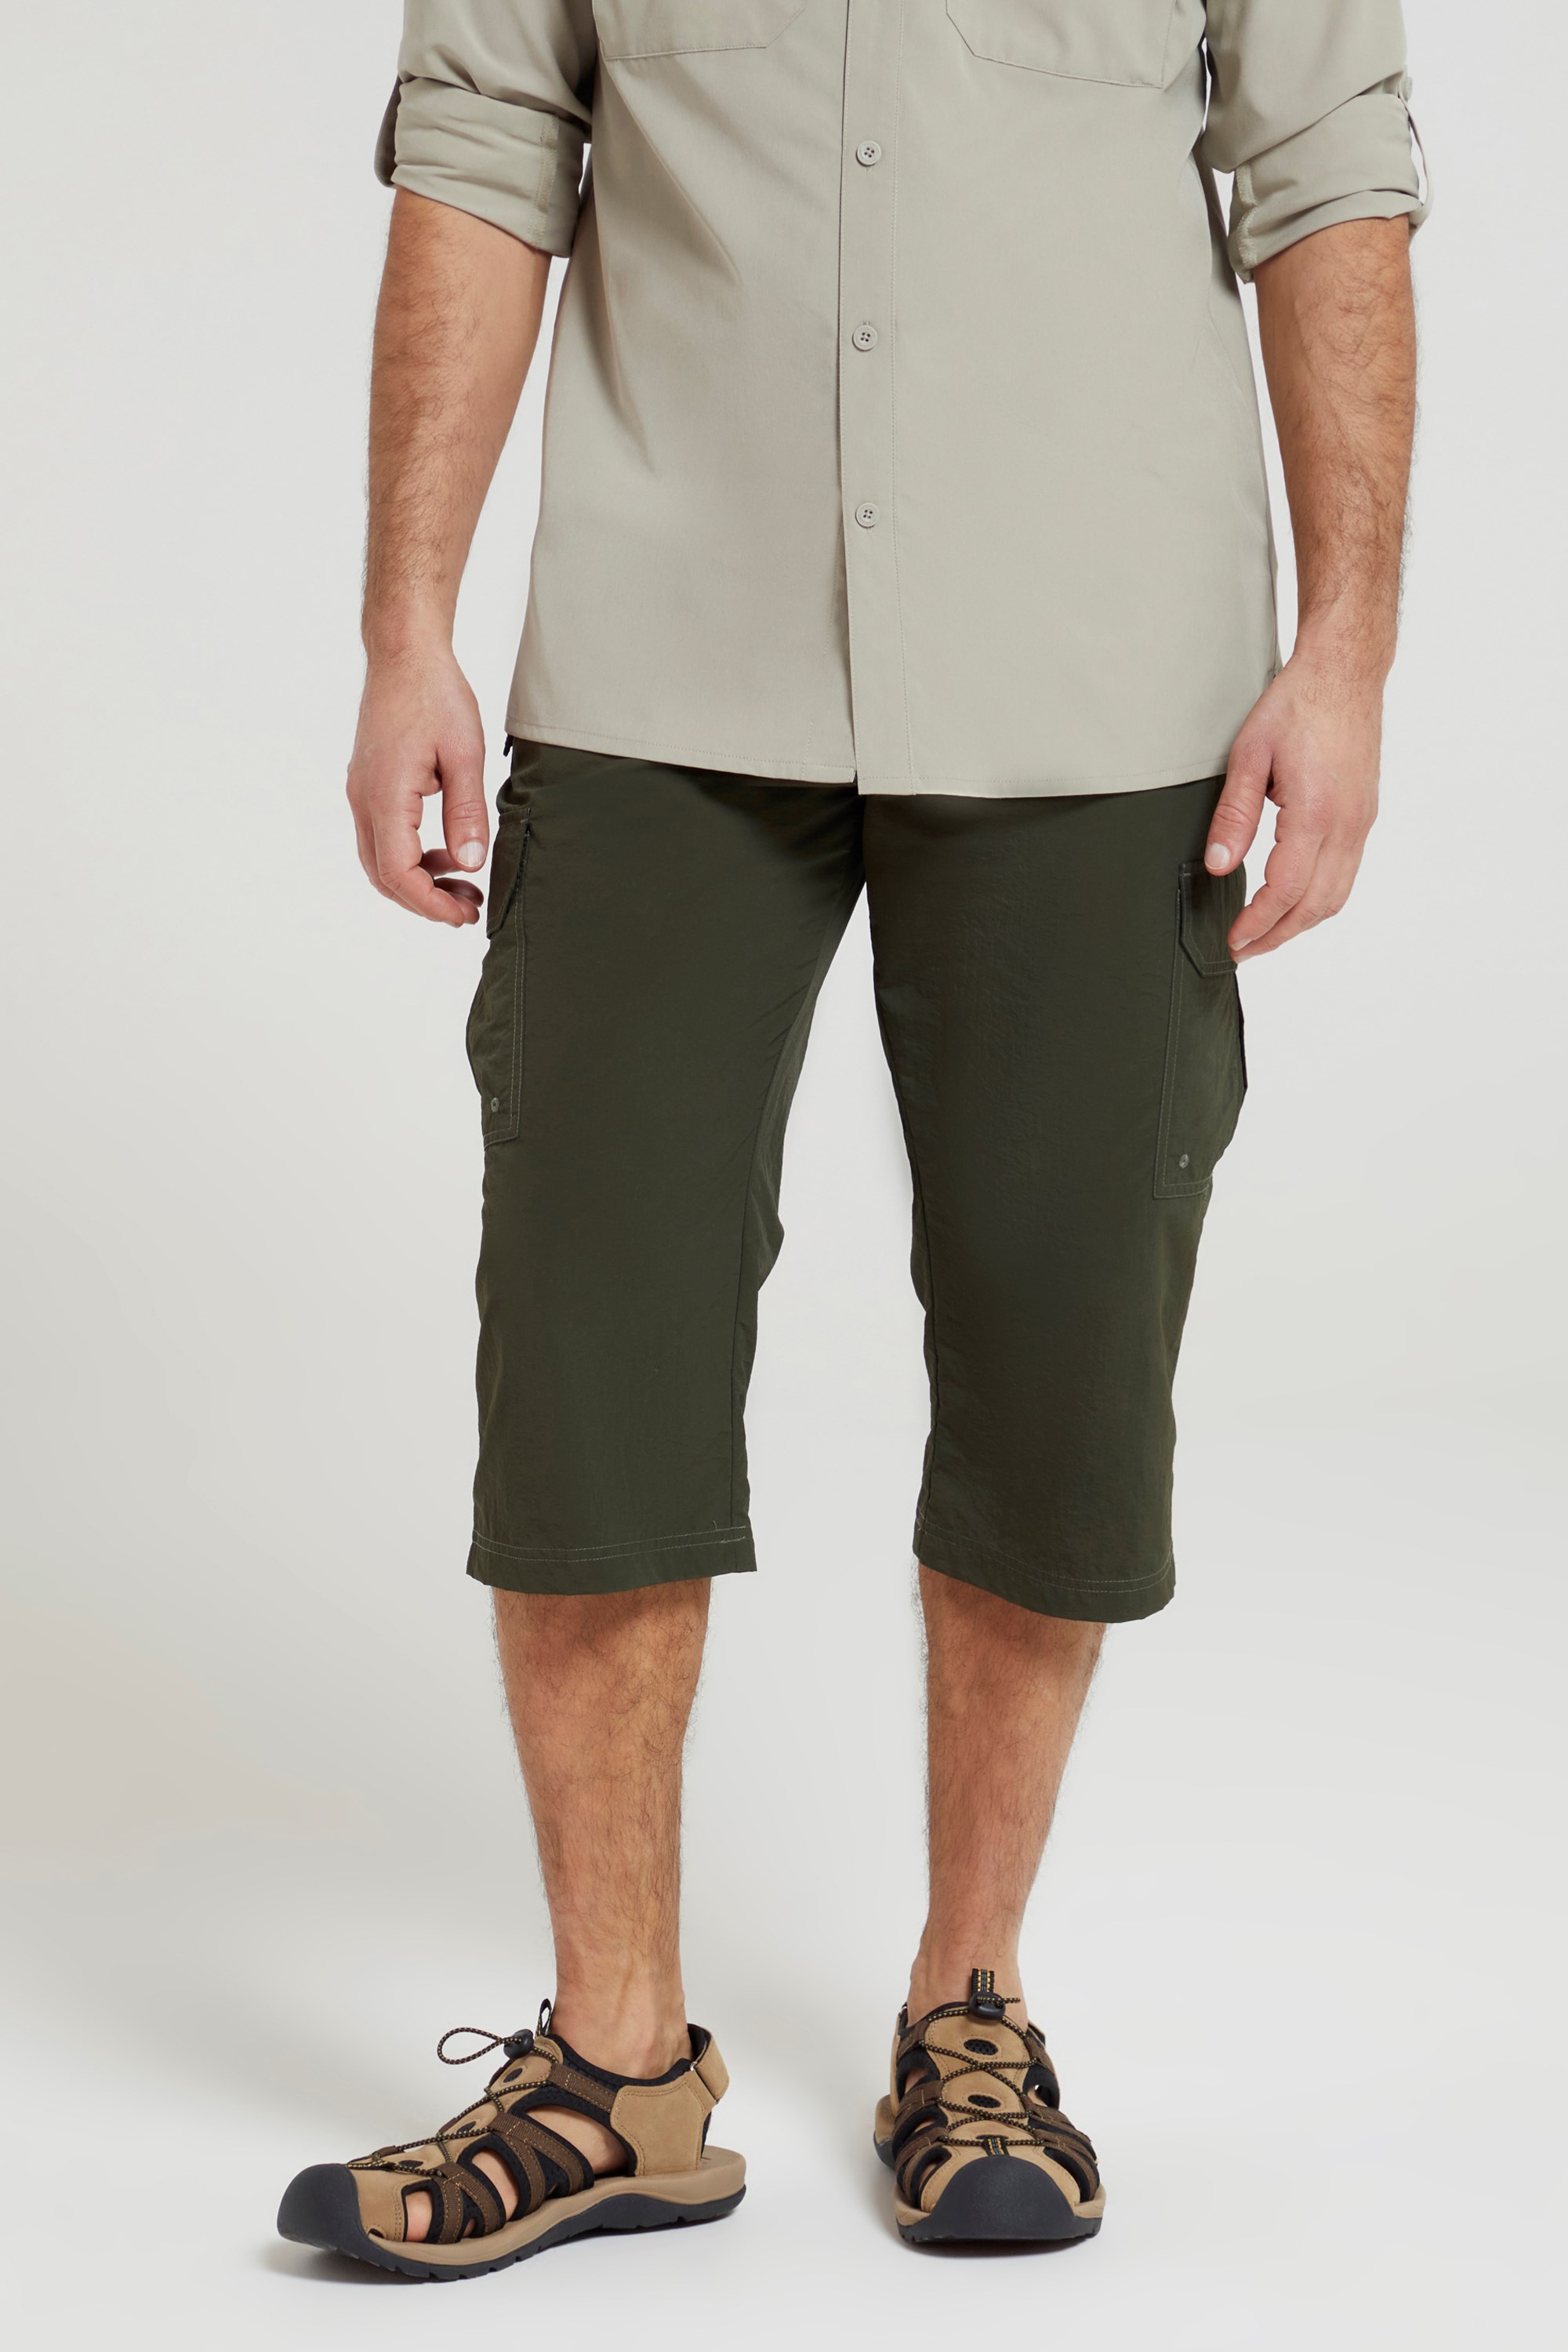 Mens NEW Cargo Shorts Below Knee Long Length 6 Pockets Sizes 30-43 Walk  Pants